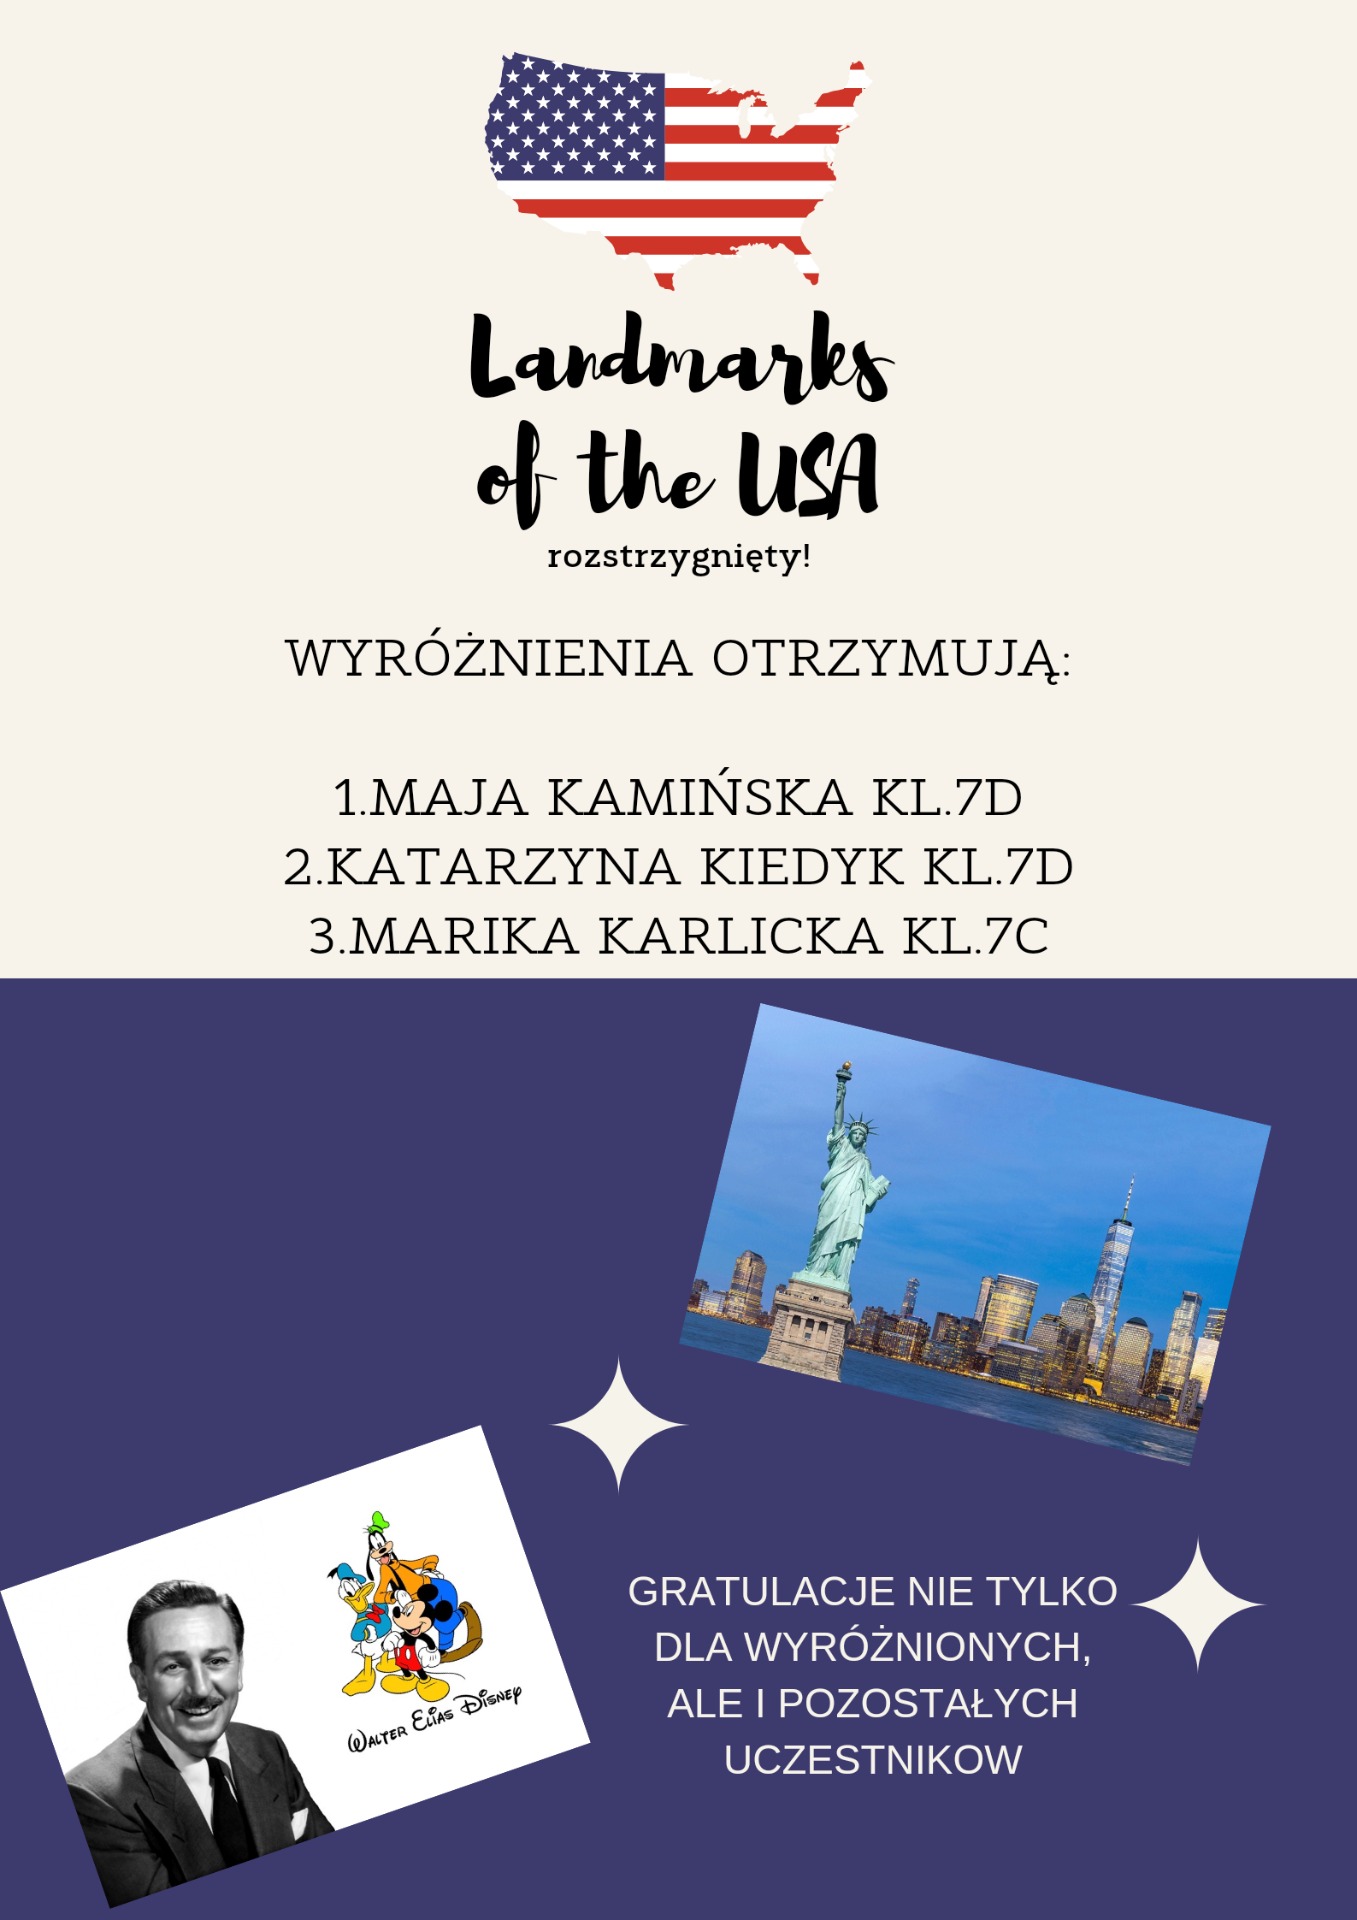 Landmarks of the USA - Obrazek 1